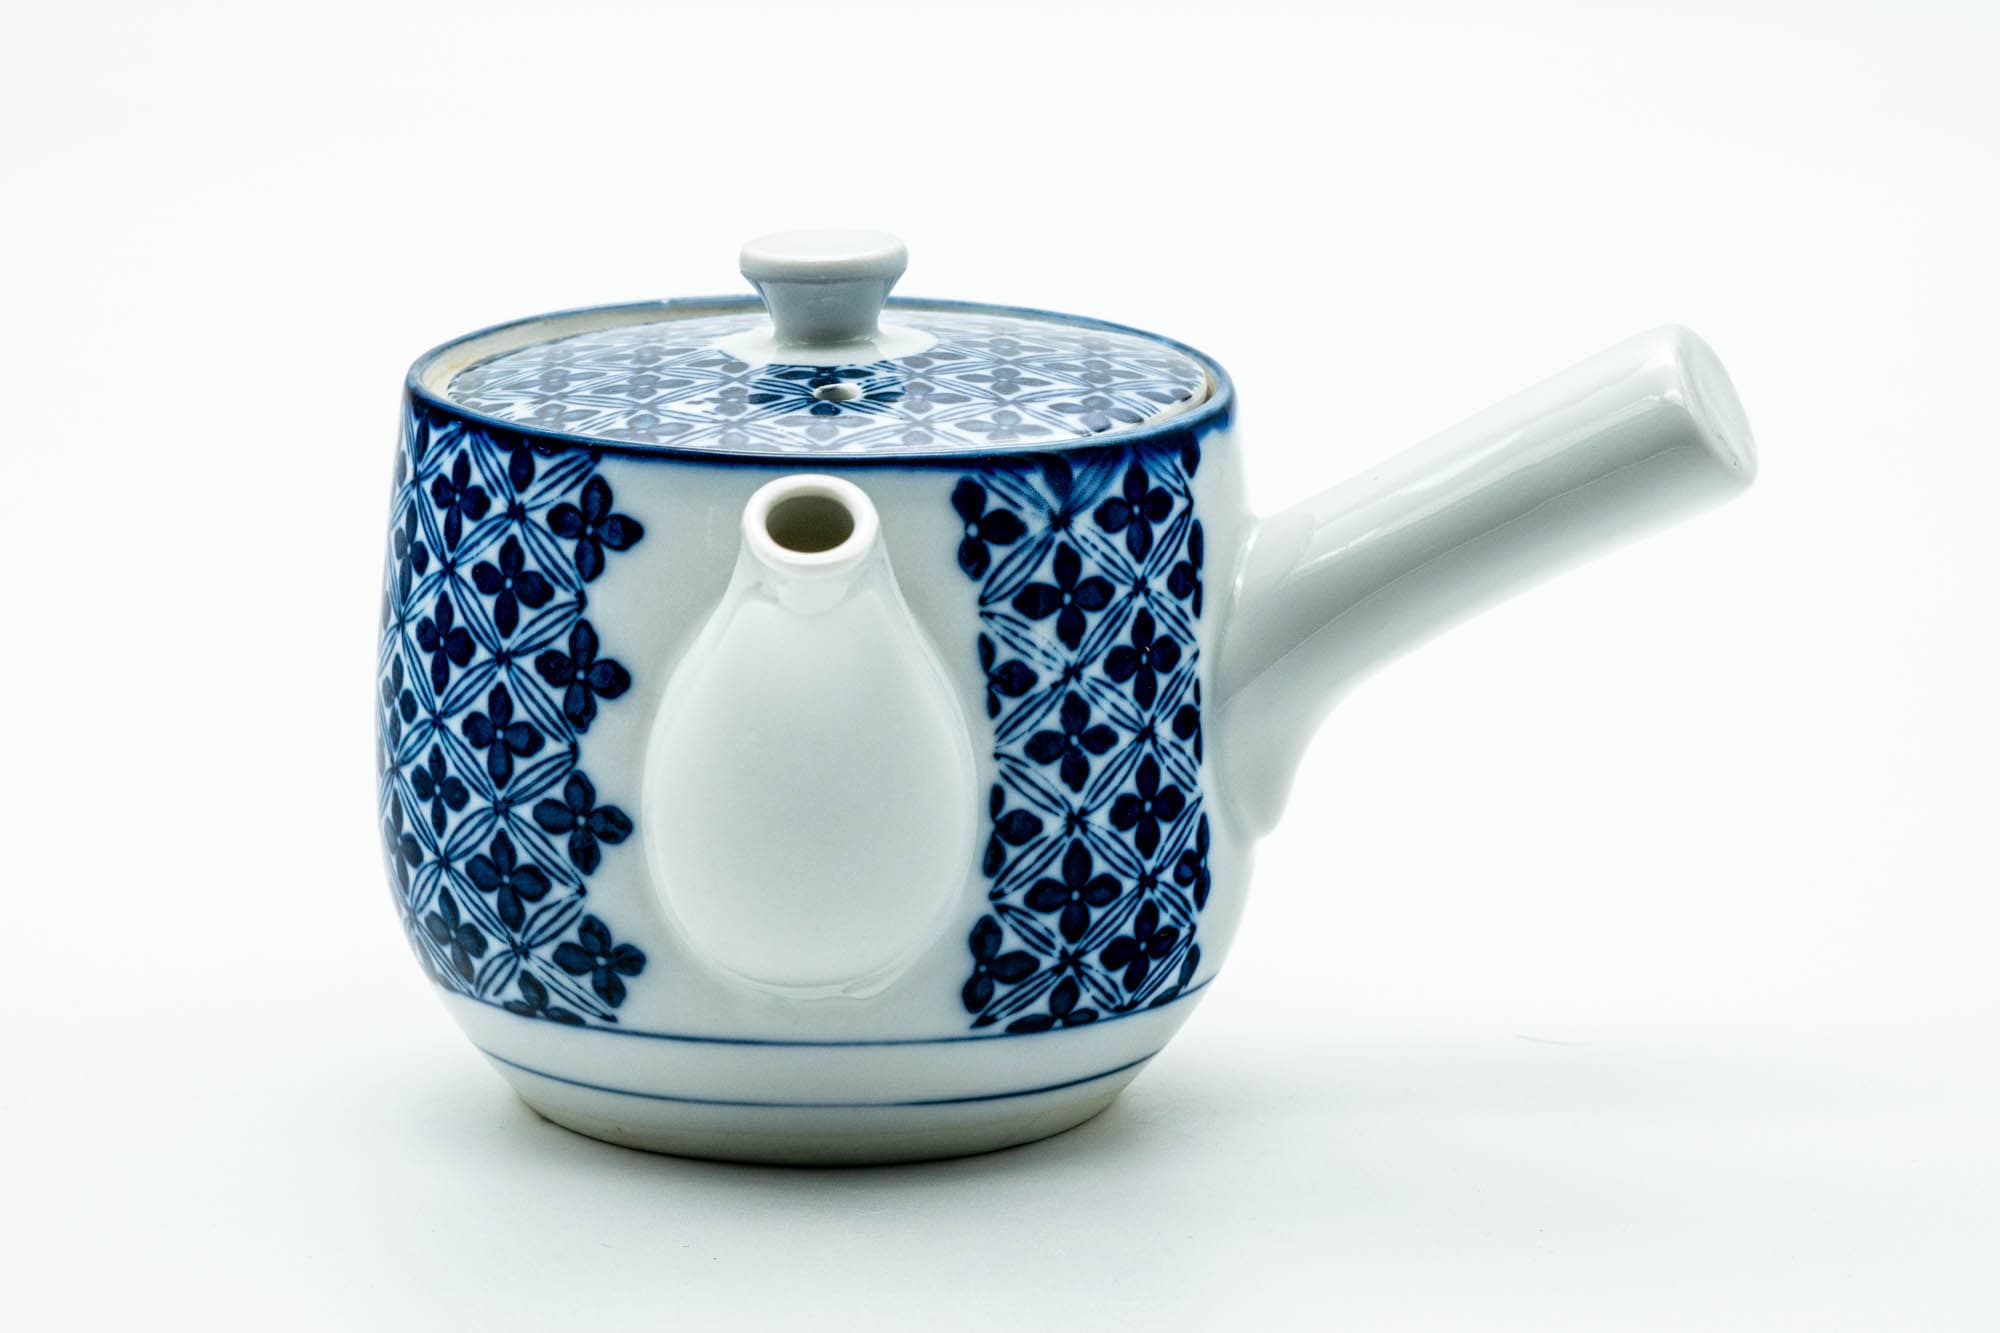 Japanese Kyusu - Blue Geometric Tessellated Arita-yaki Porcelain Teapot - 350ml